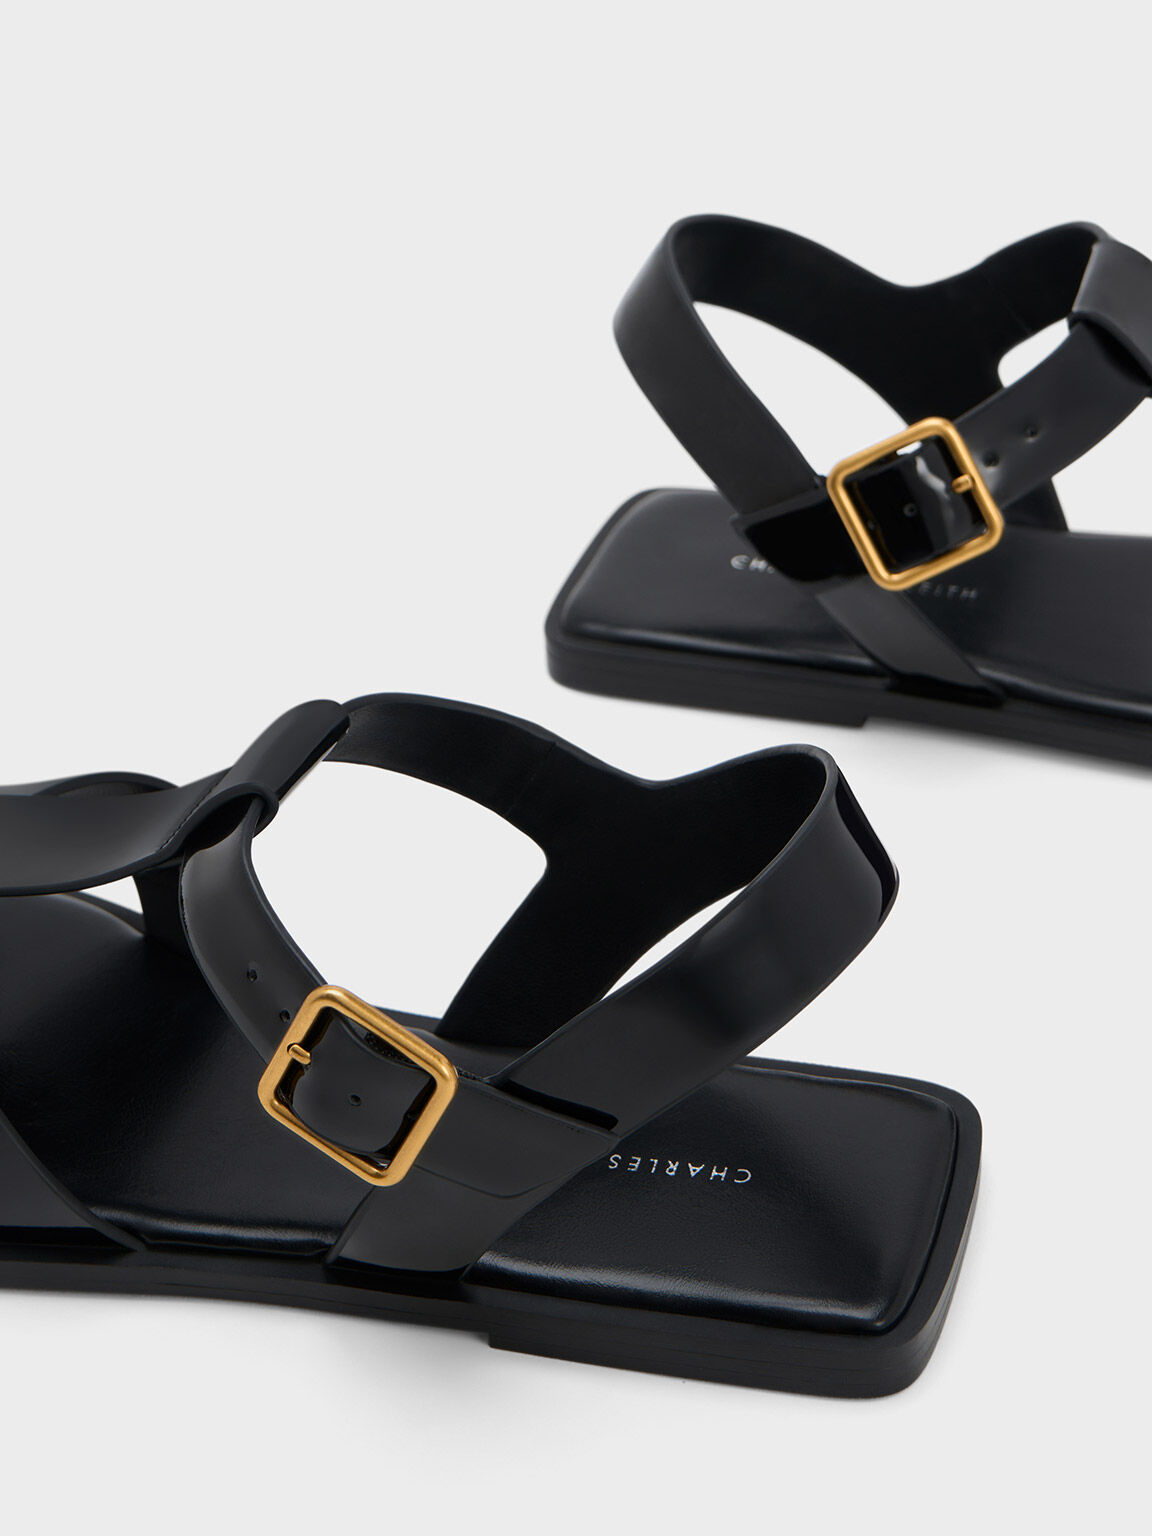 Black V-Strap Thong Sandals - CHARLES & KEITH UK